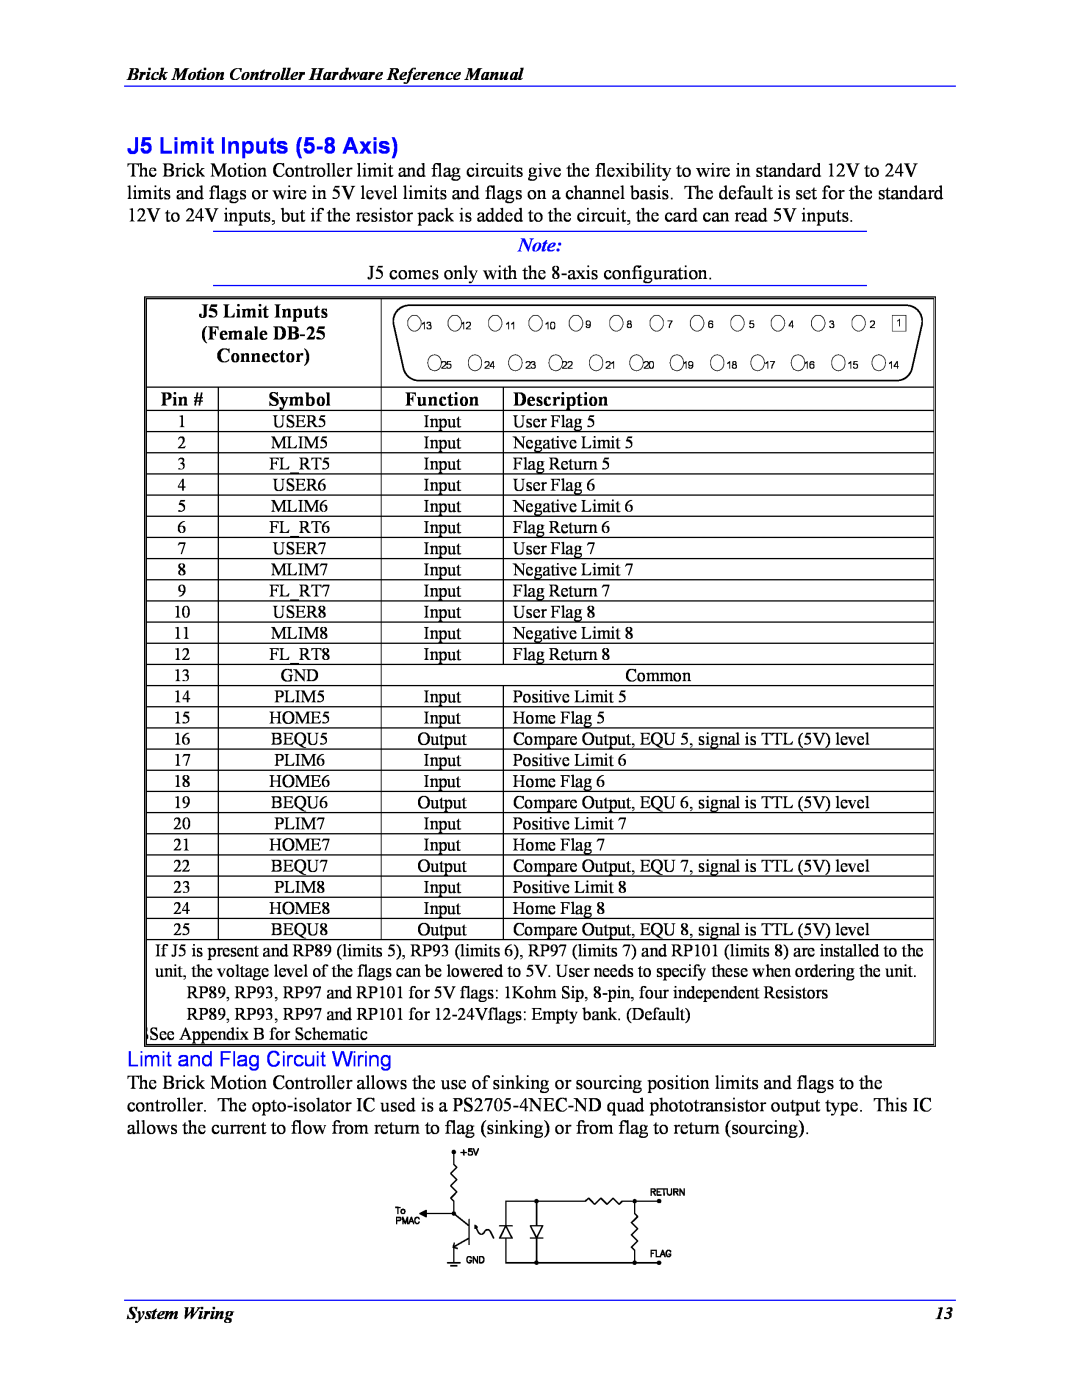 Delta Tau 5xx-603869-xUxx manual J5 Limit Inputs 5-8 Axis, Limit and Flag Circuit Wiring, Pin #, Symbol, Description 